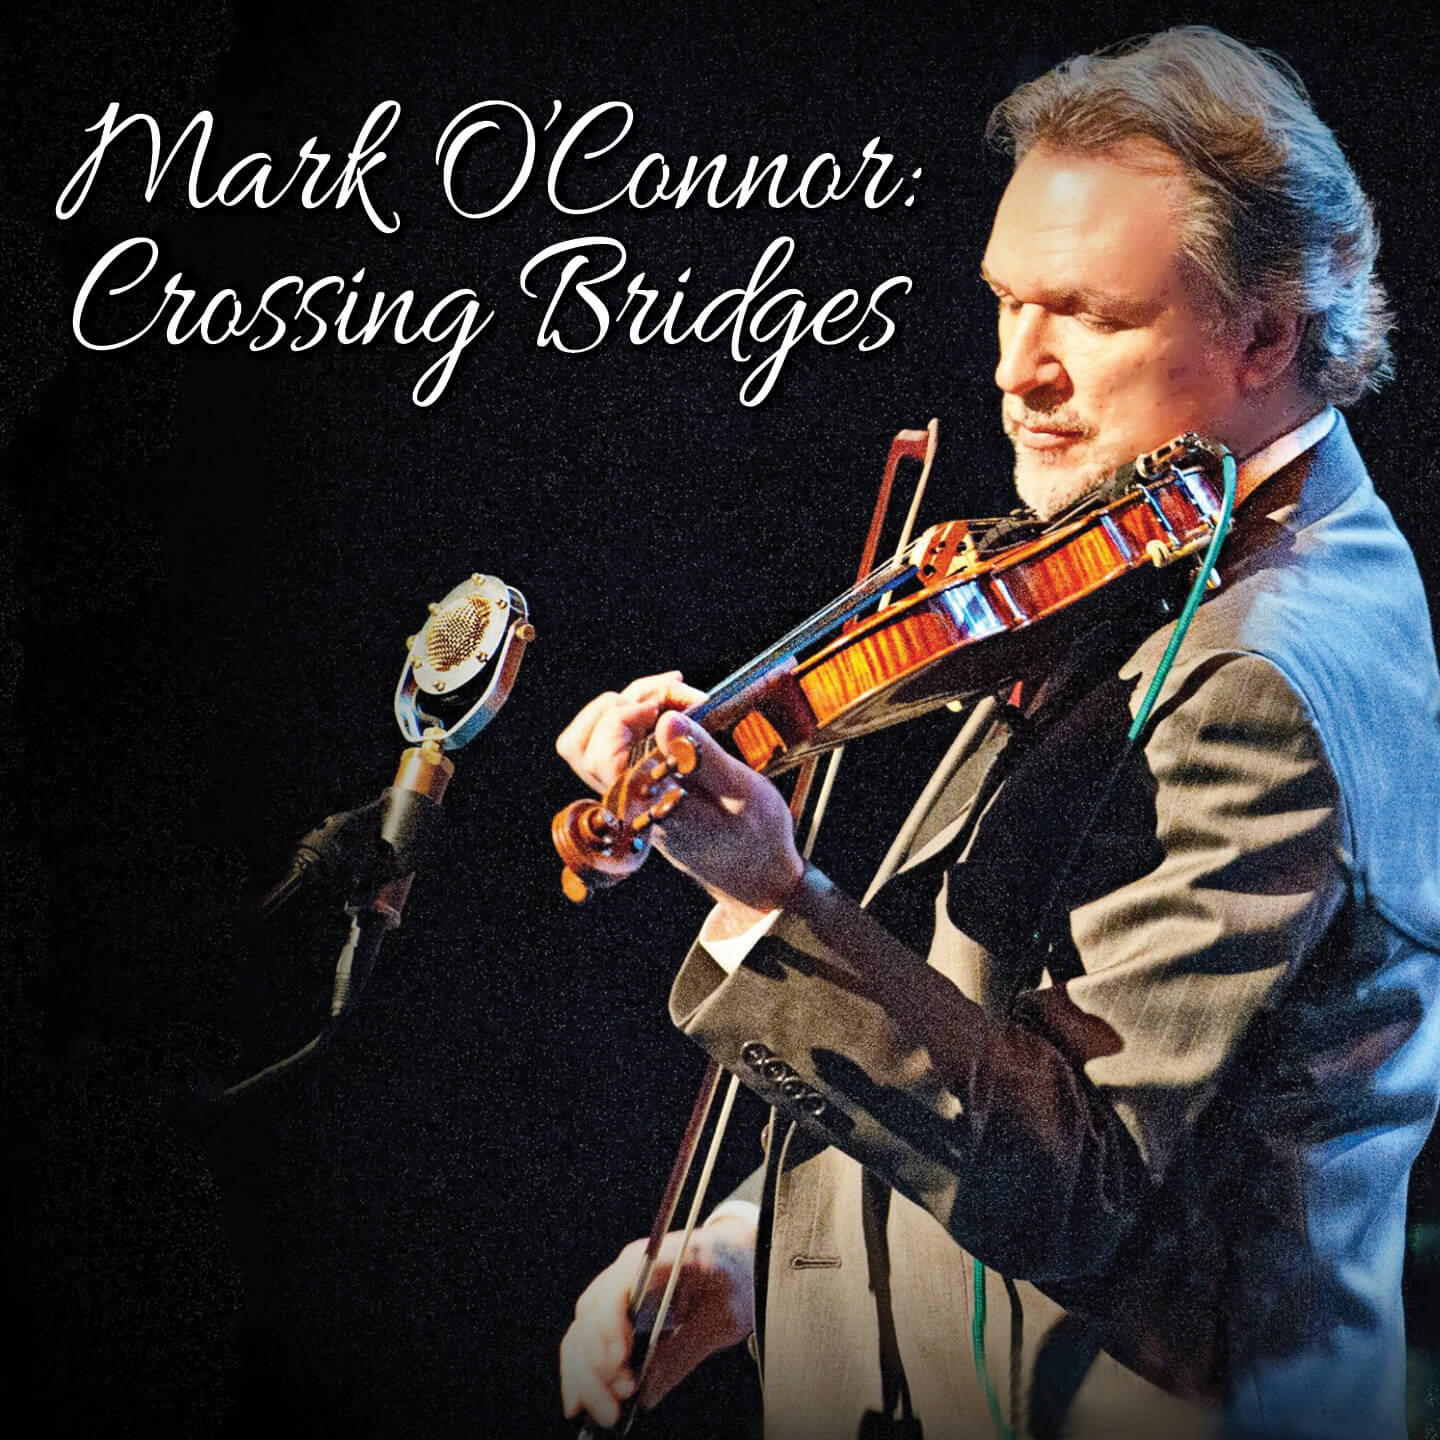 Mark O'Connor: Crossing Bridges